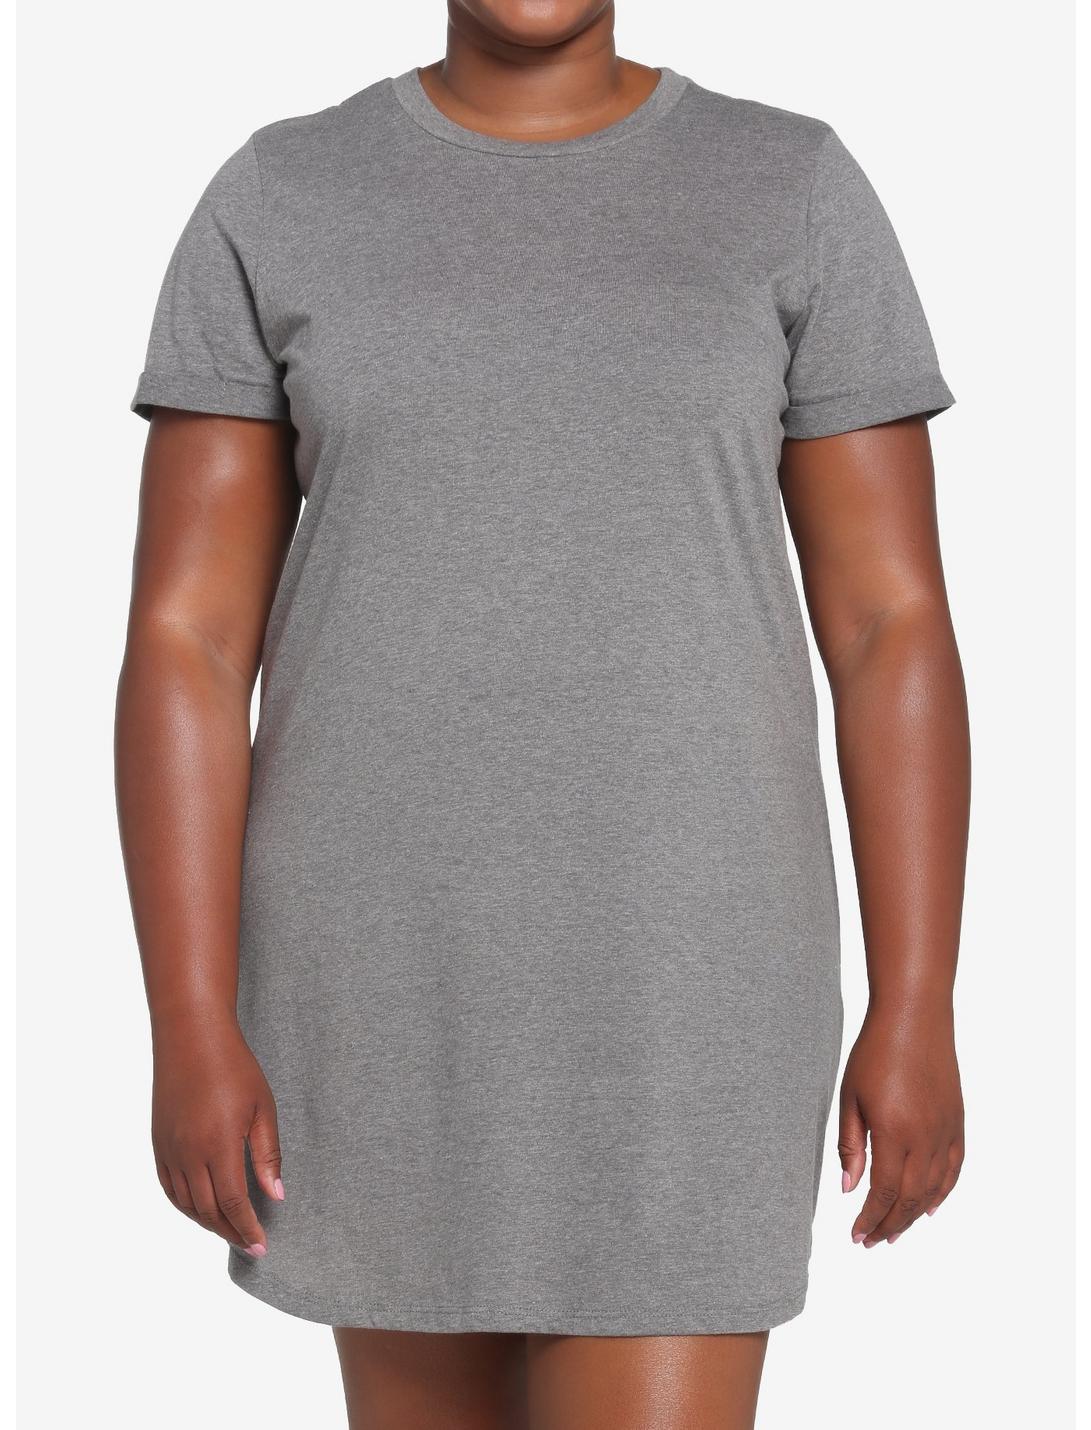 Heather Grey T-Shirt Dress Plus Size, HEATHER GREY, hi-res